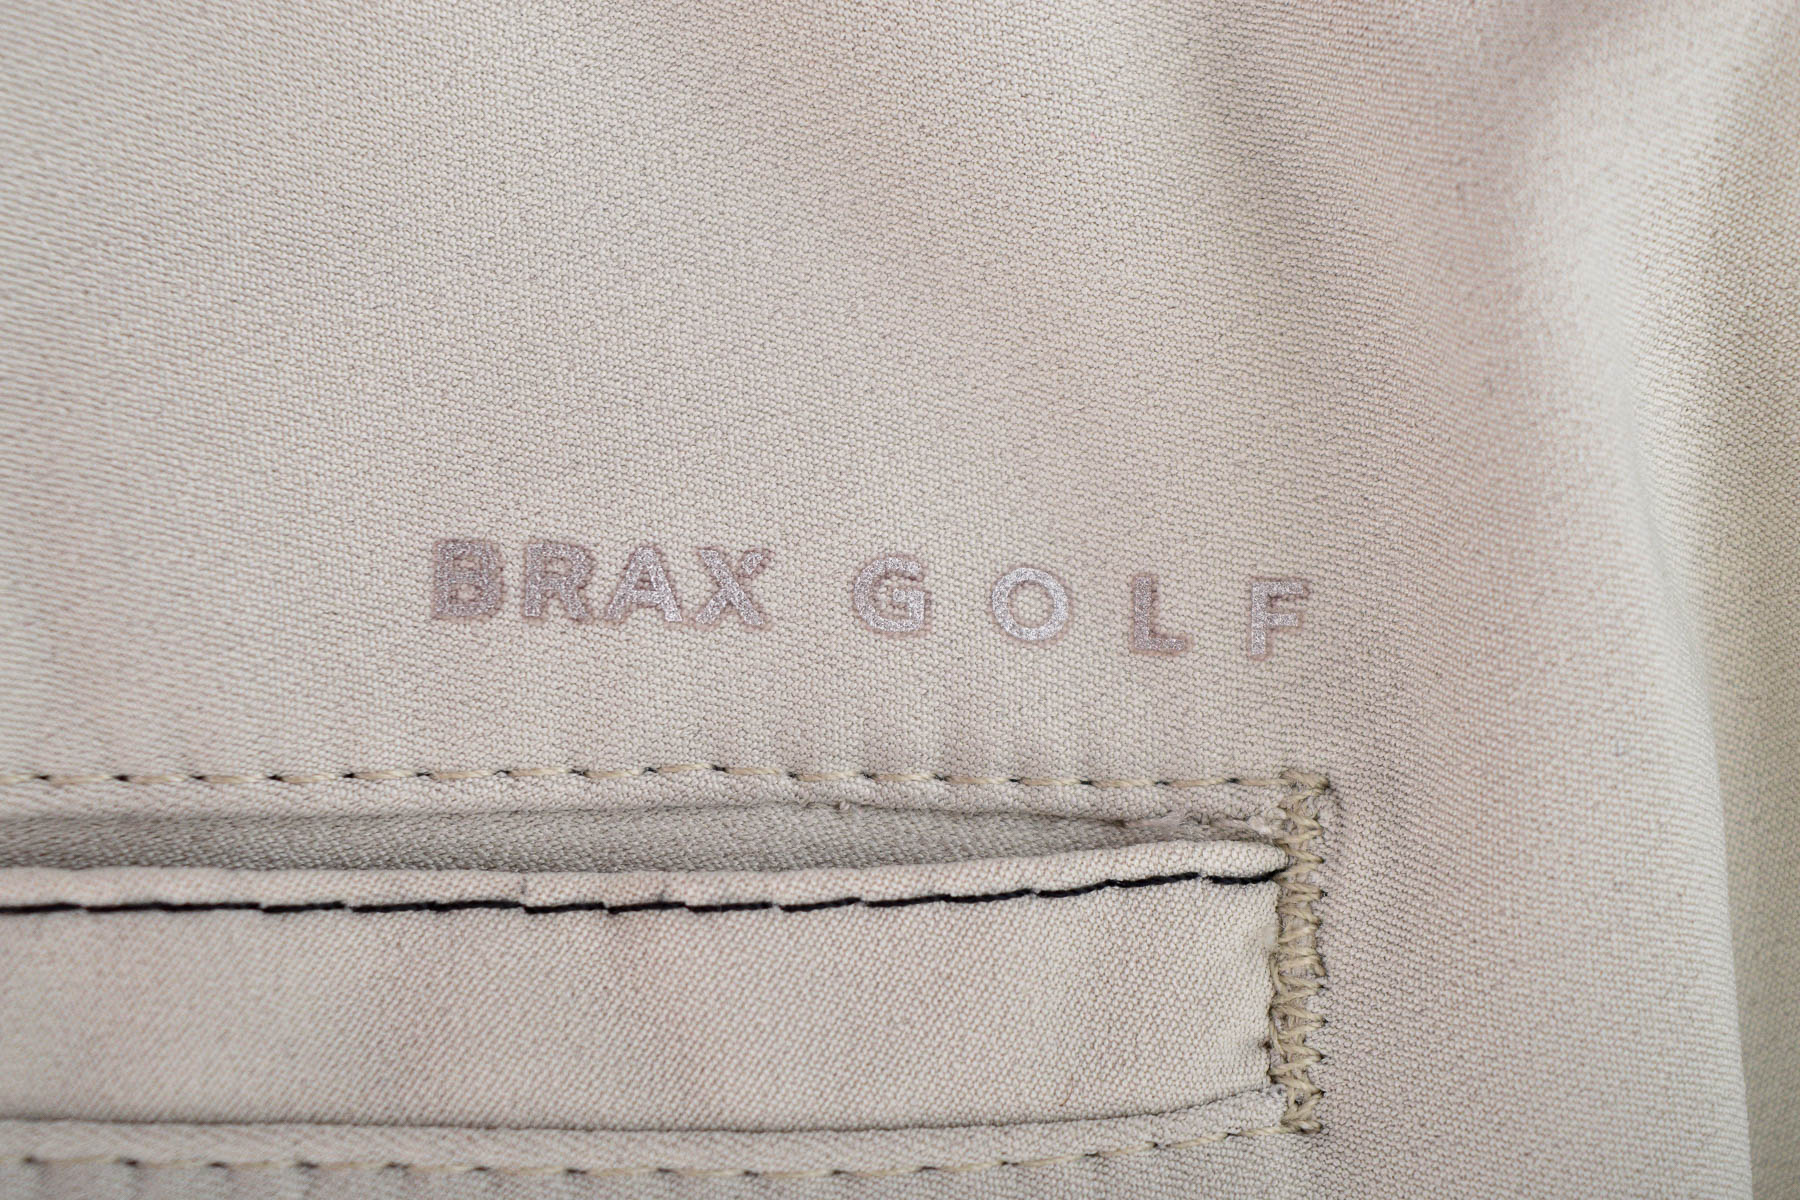 Męskie spodnie - BRAX GOLF - 2